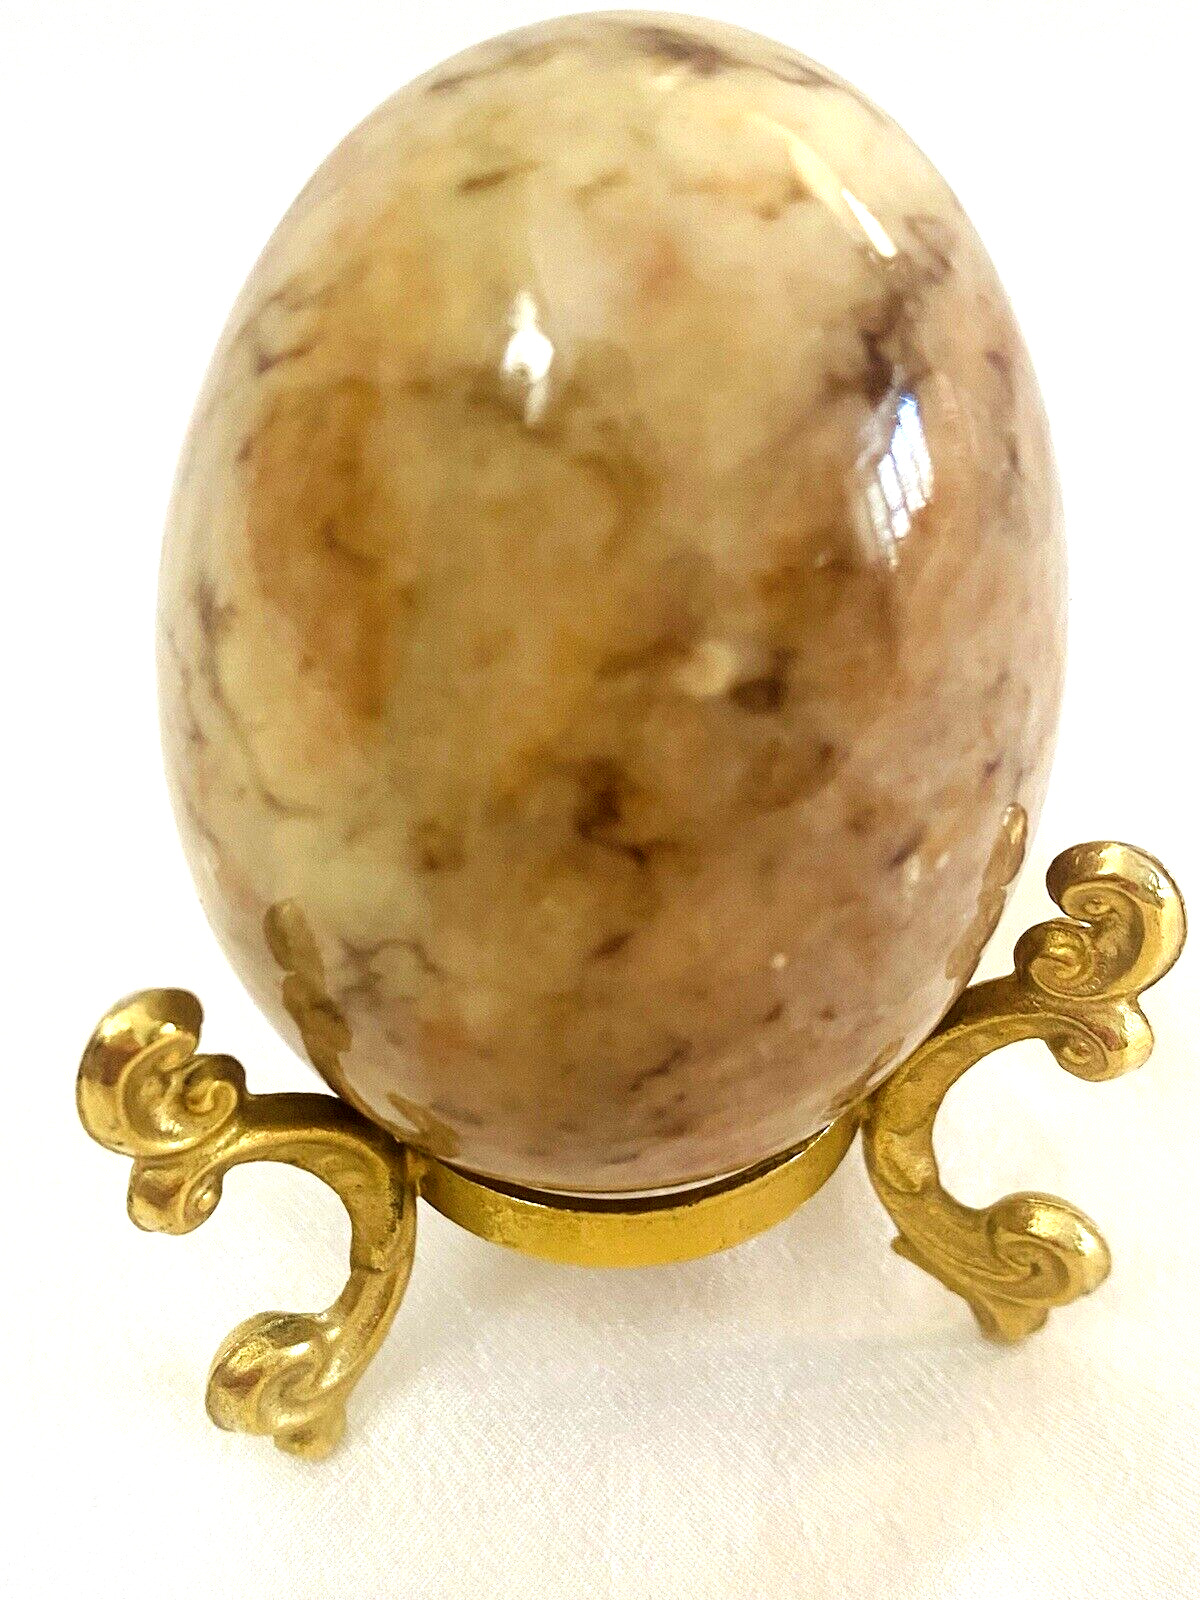 Vintage Polished Natural Marble Stone Egg Pink Hue / Brown Veins w/ Stand